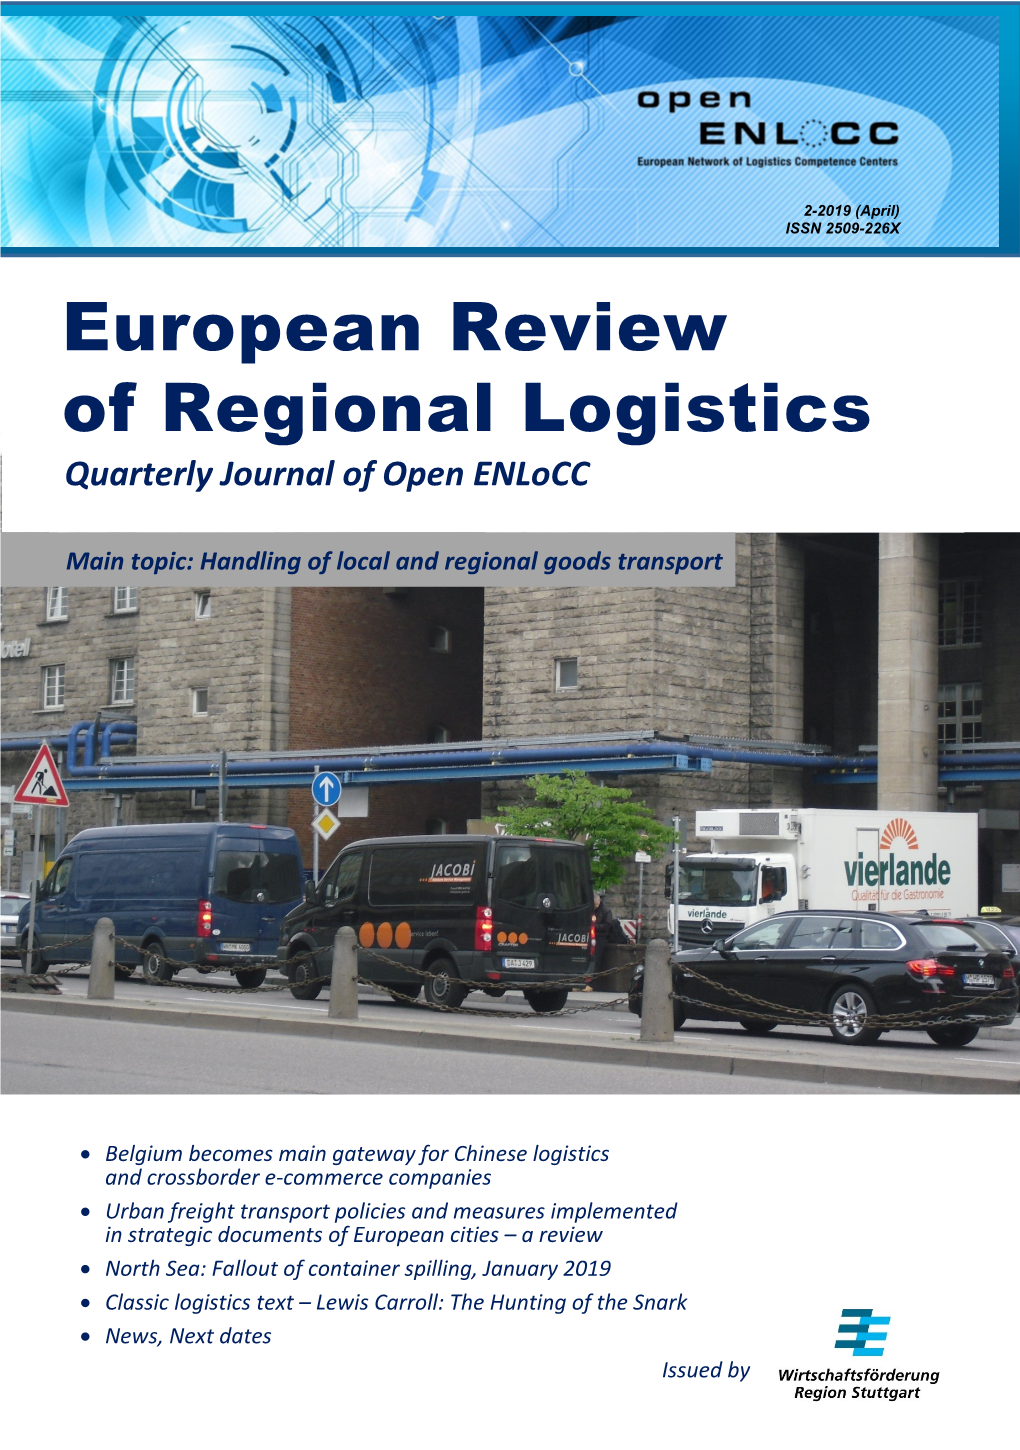 European Review of Regional Logistics 2-2019